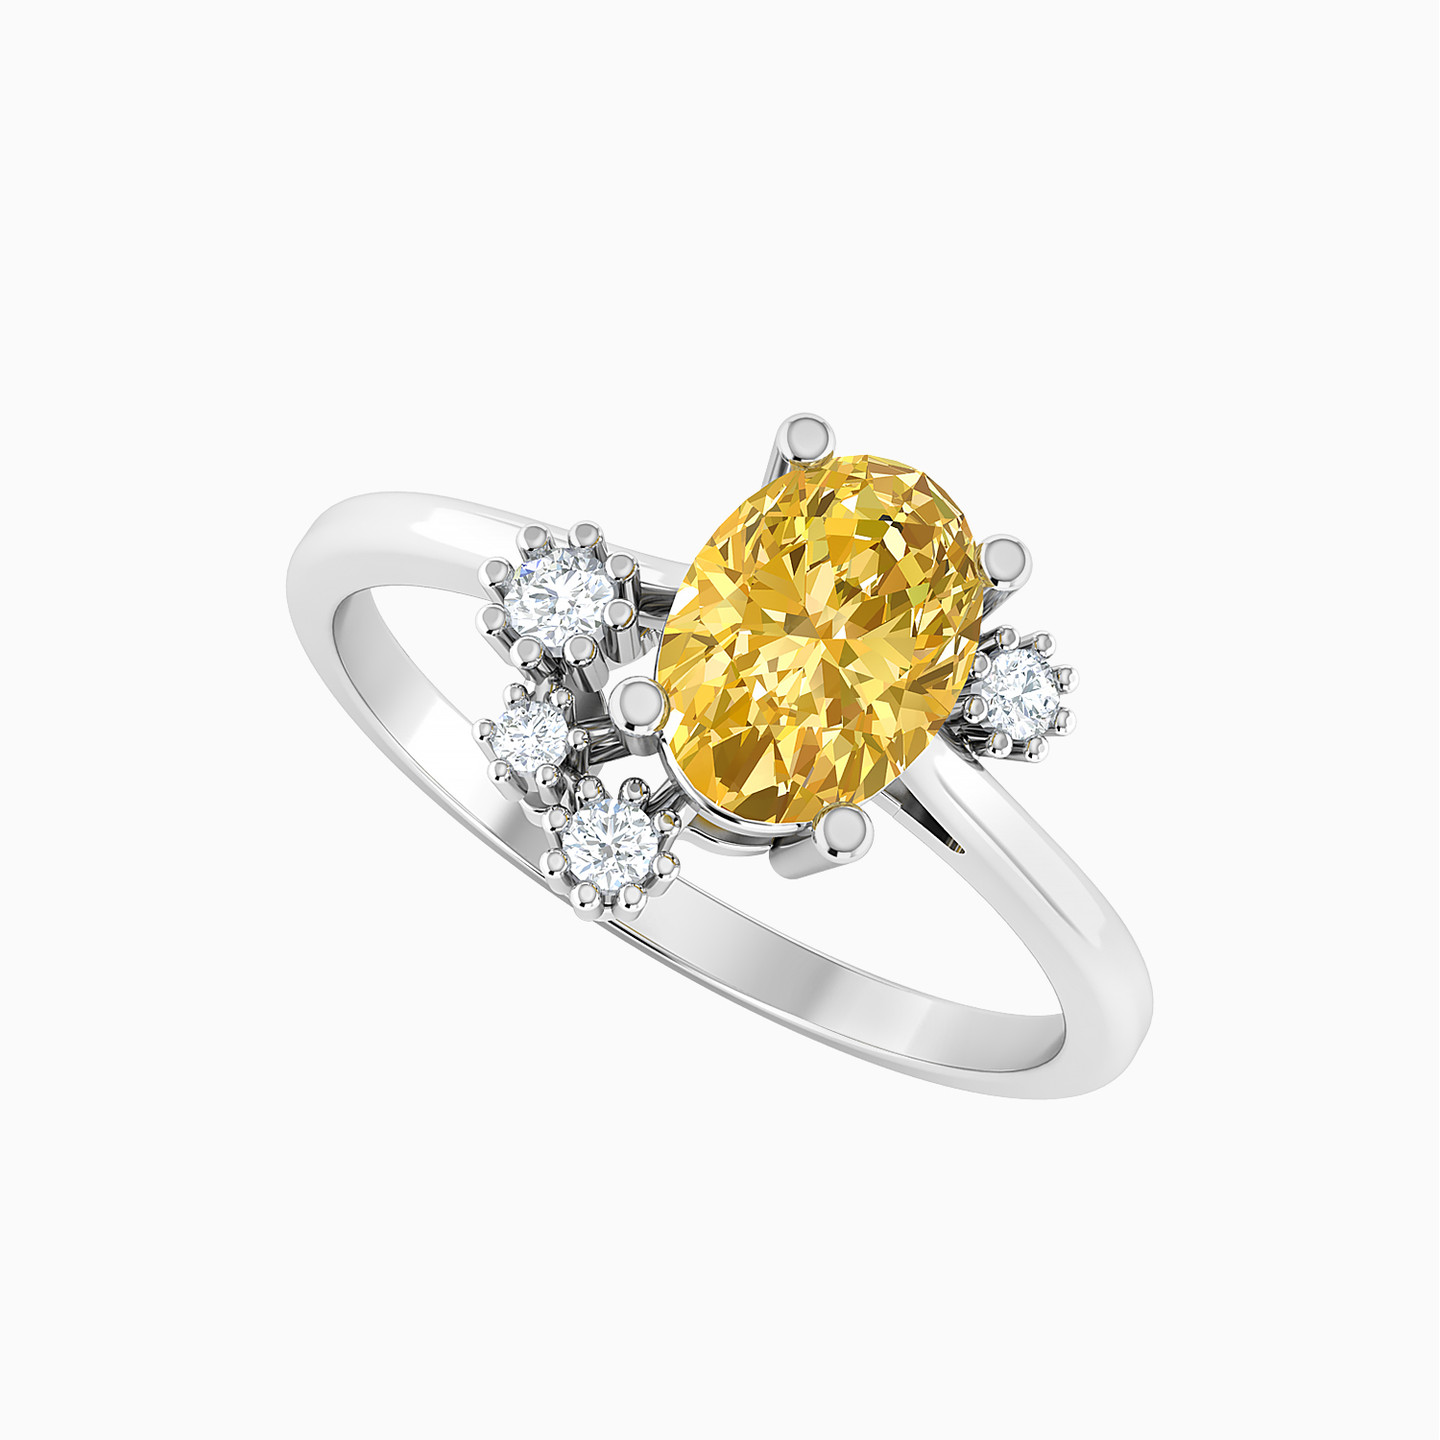 18K Gold Diamond & Colored Stones Statement Ring - 2